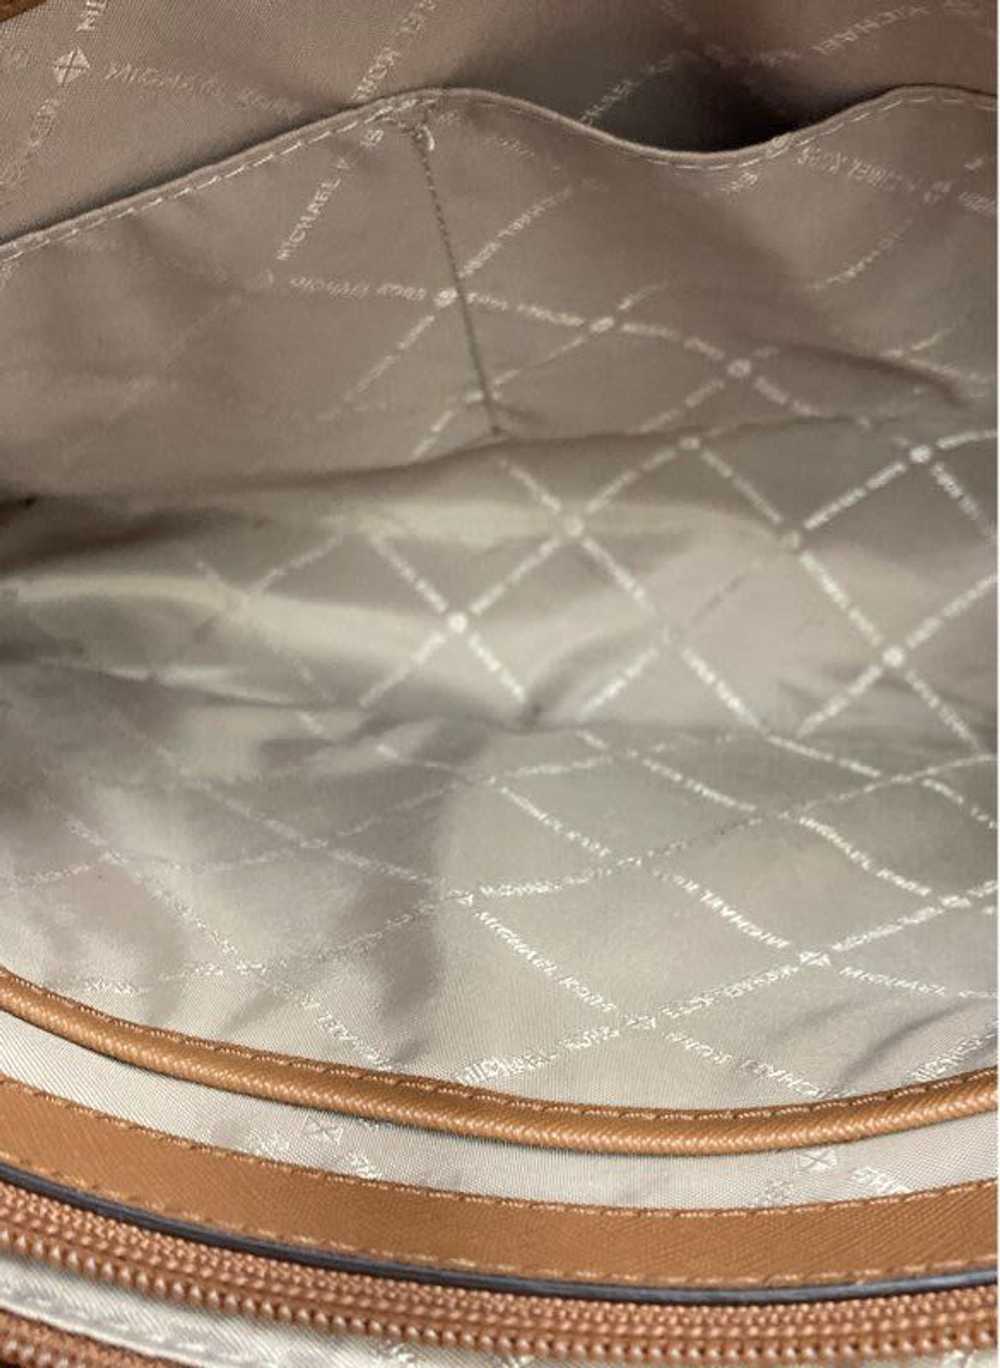 Michael Kors Signature Brown and White Tote Bag - image 4